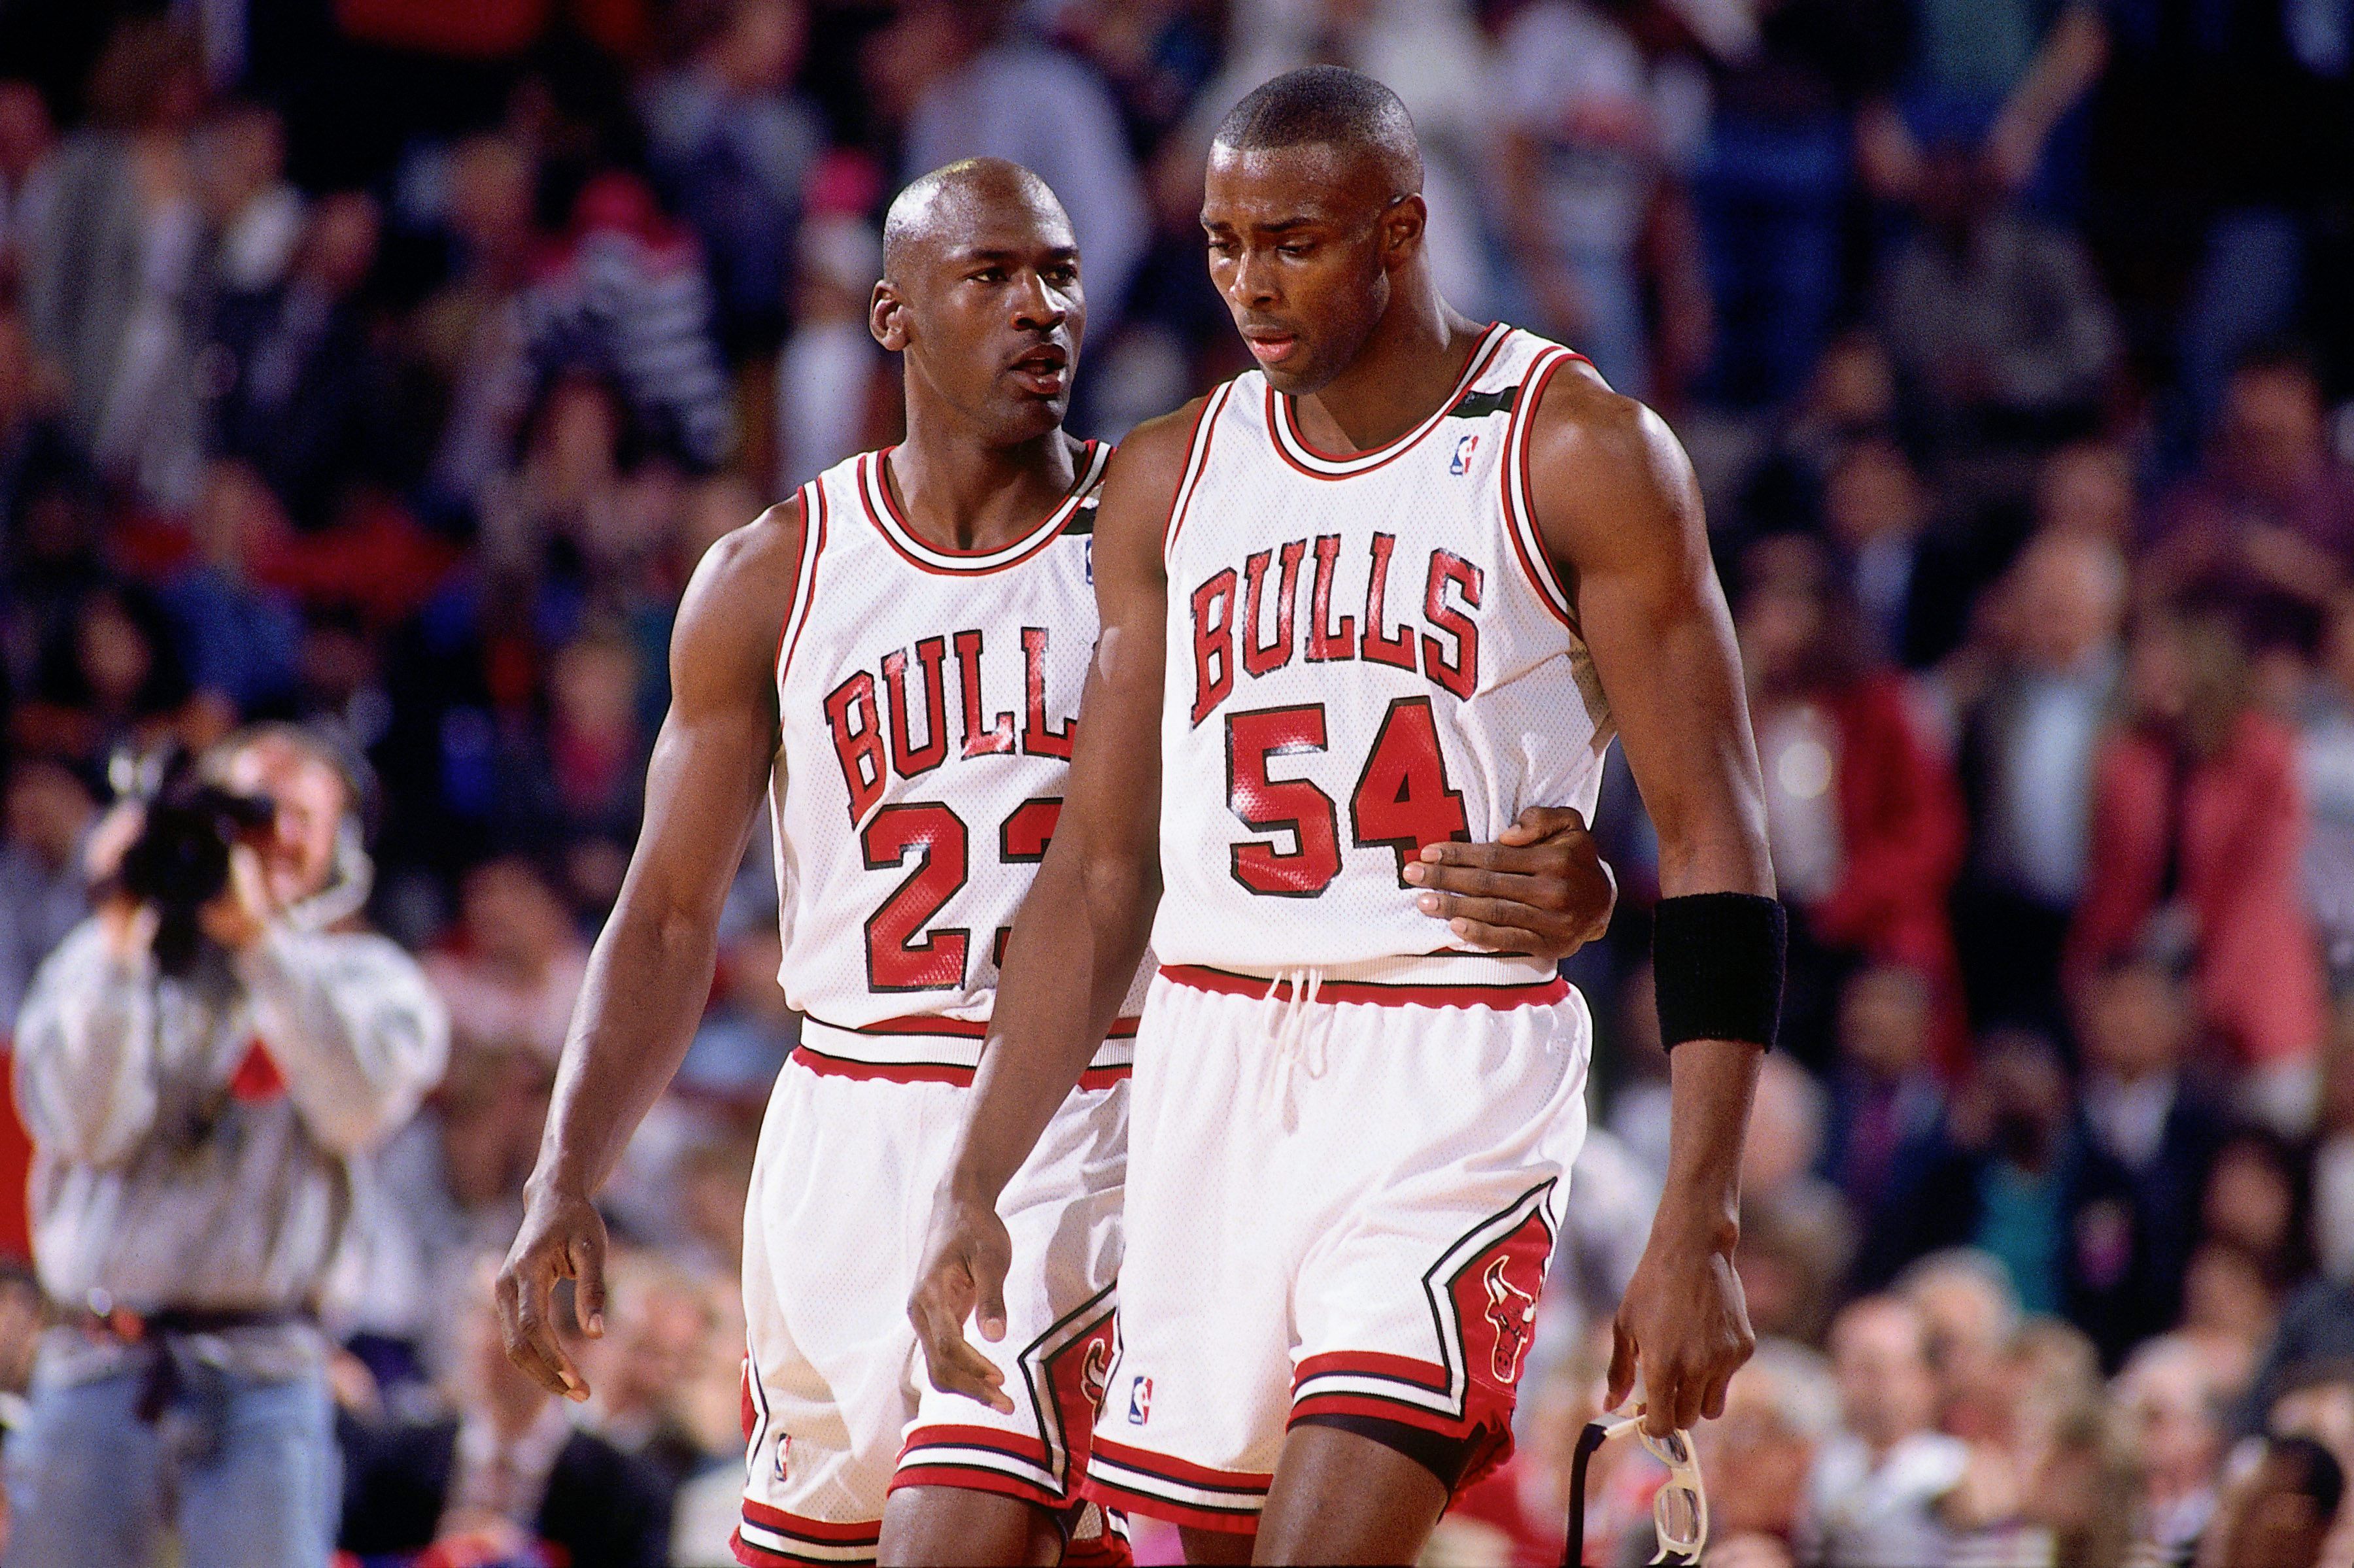 Last Dance: Takeaways from 10-part series on Michael Jordan and Bulls